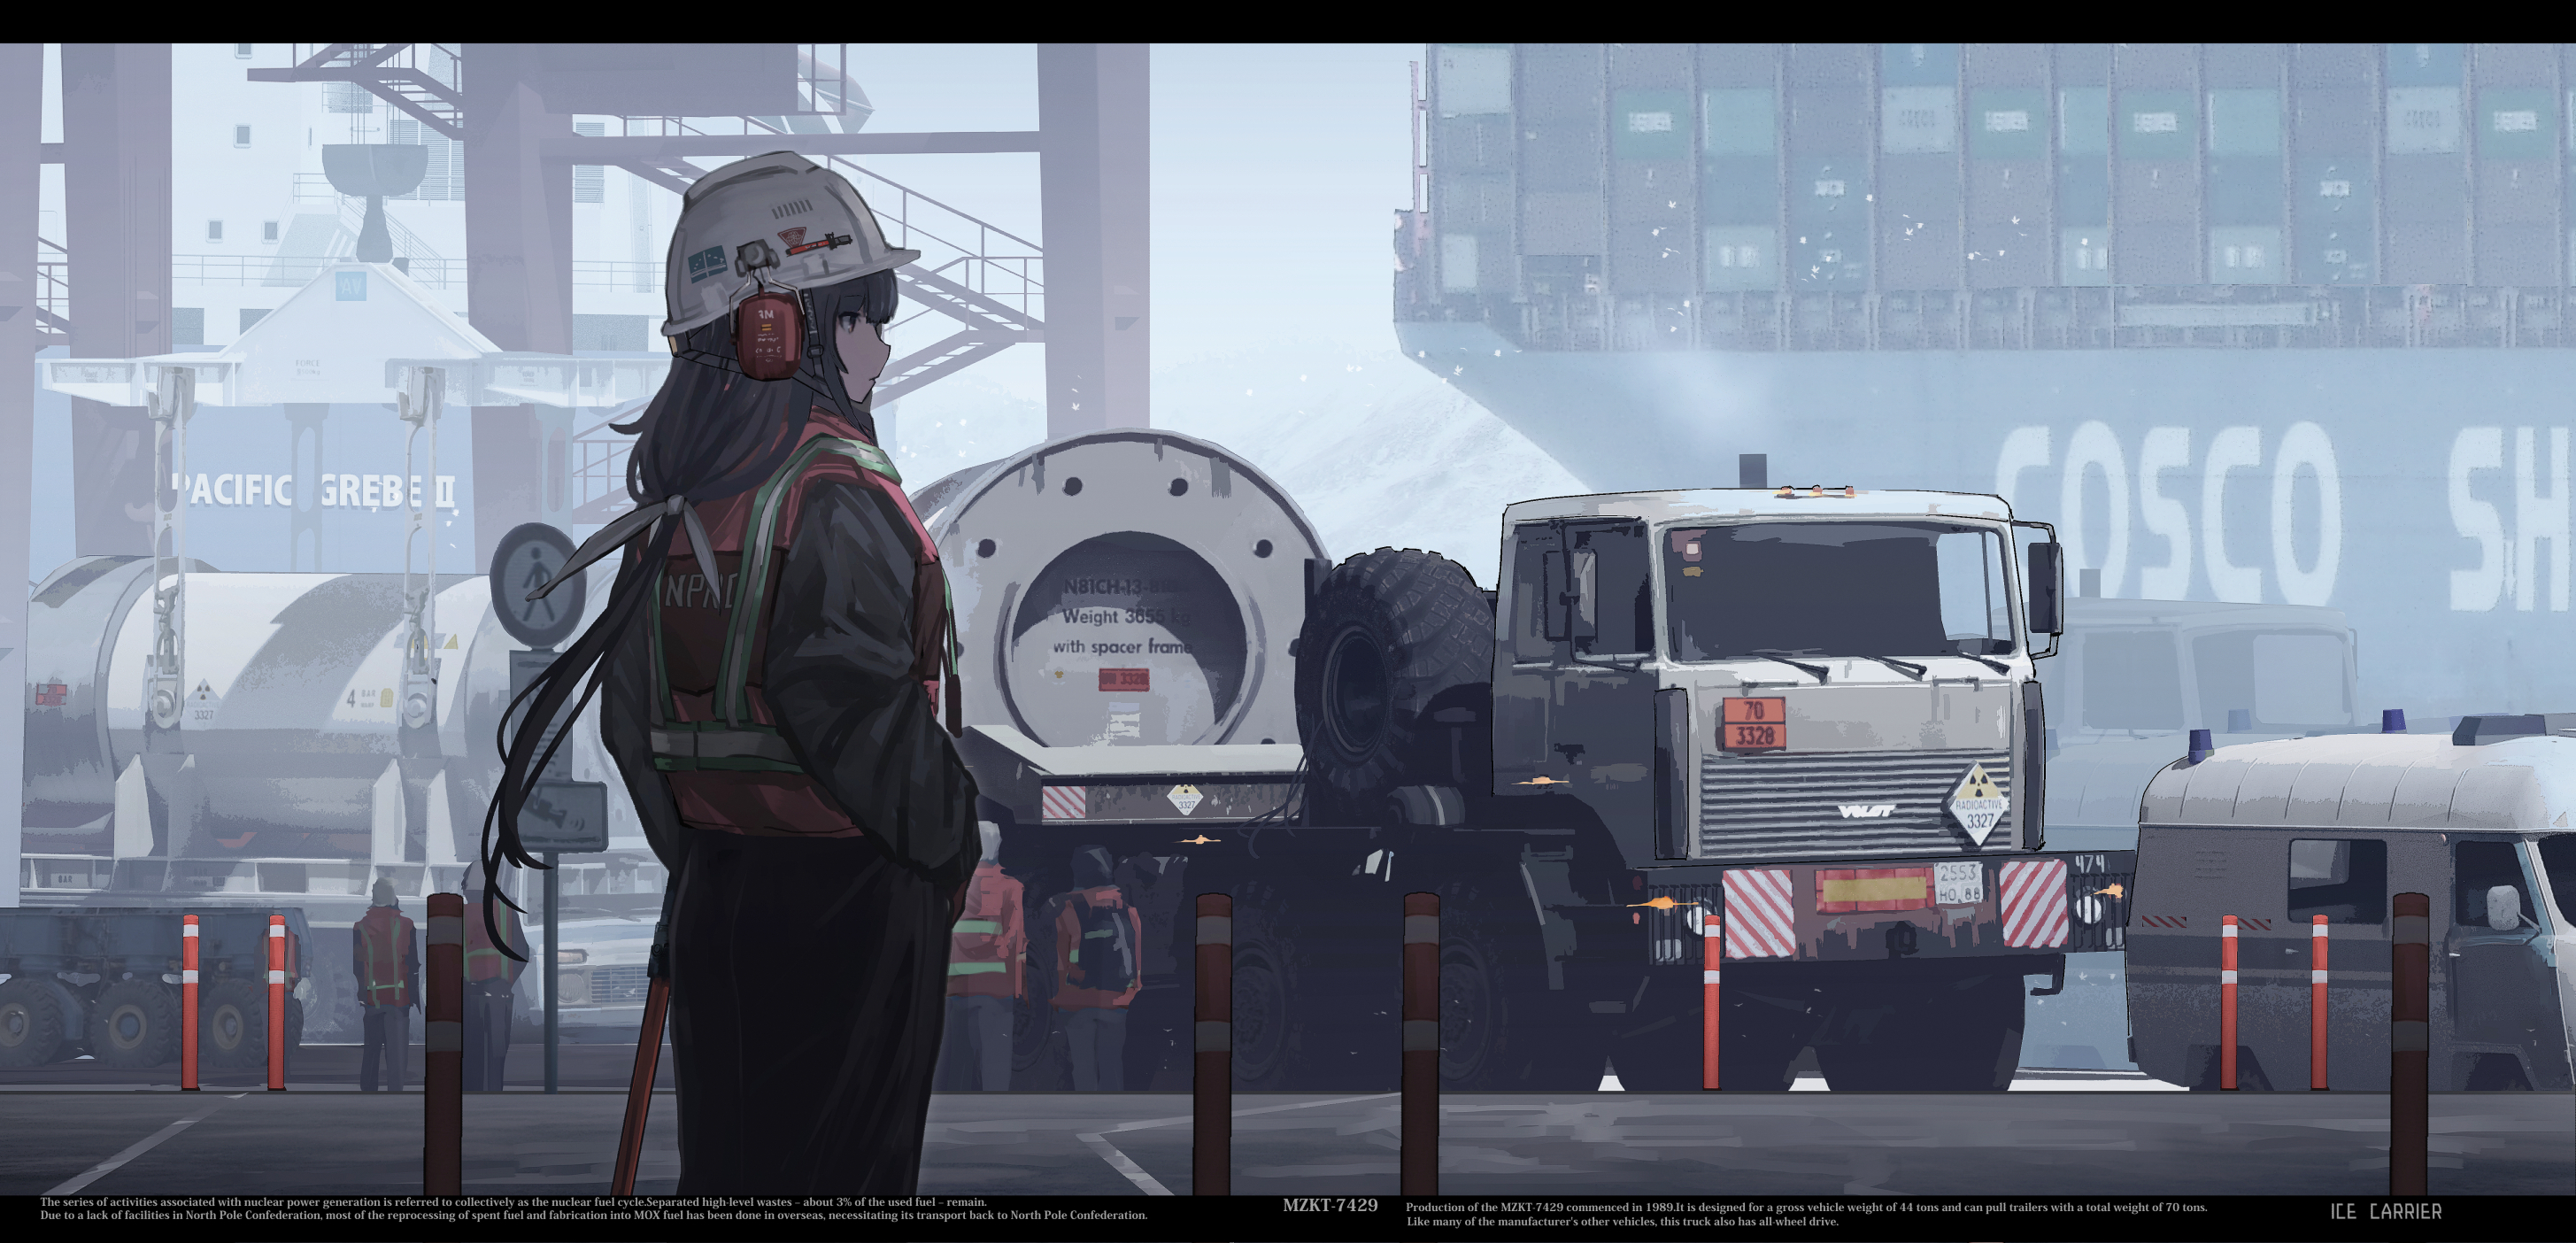 prompthunt: An anime art of car GAZelle truck, digital art, 8k resolution,  anime style, wide angle